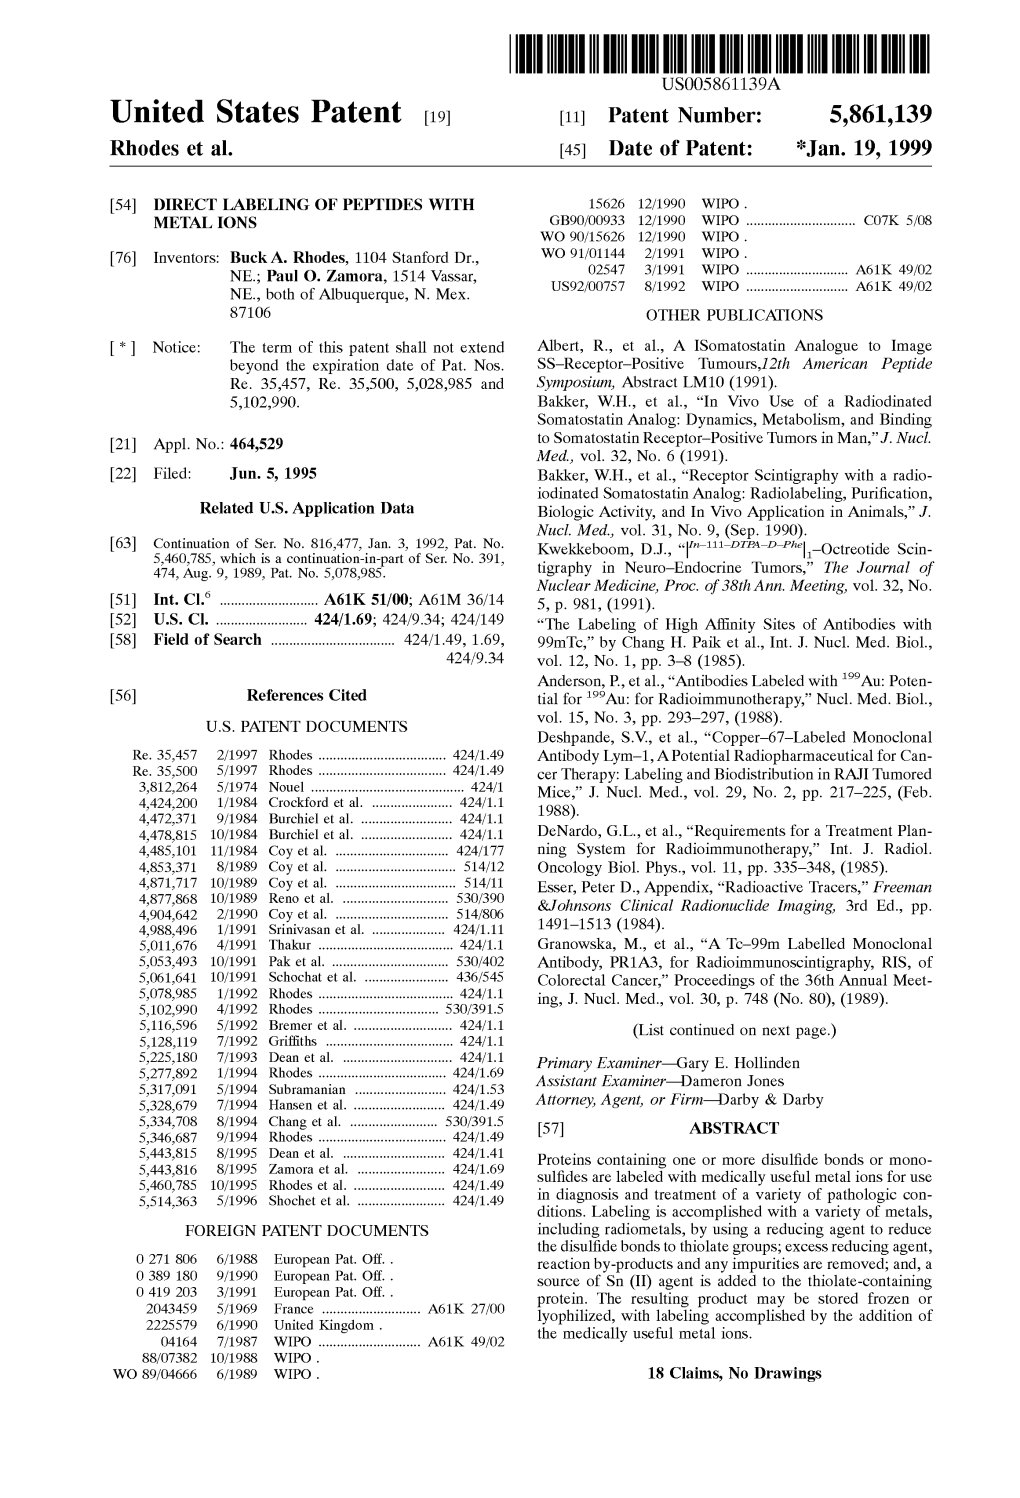 United States Patent (19) 11 Patent Number: 5,861,139 Rhodes Et Al